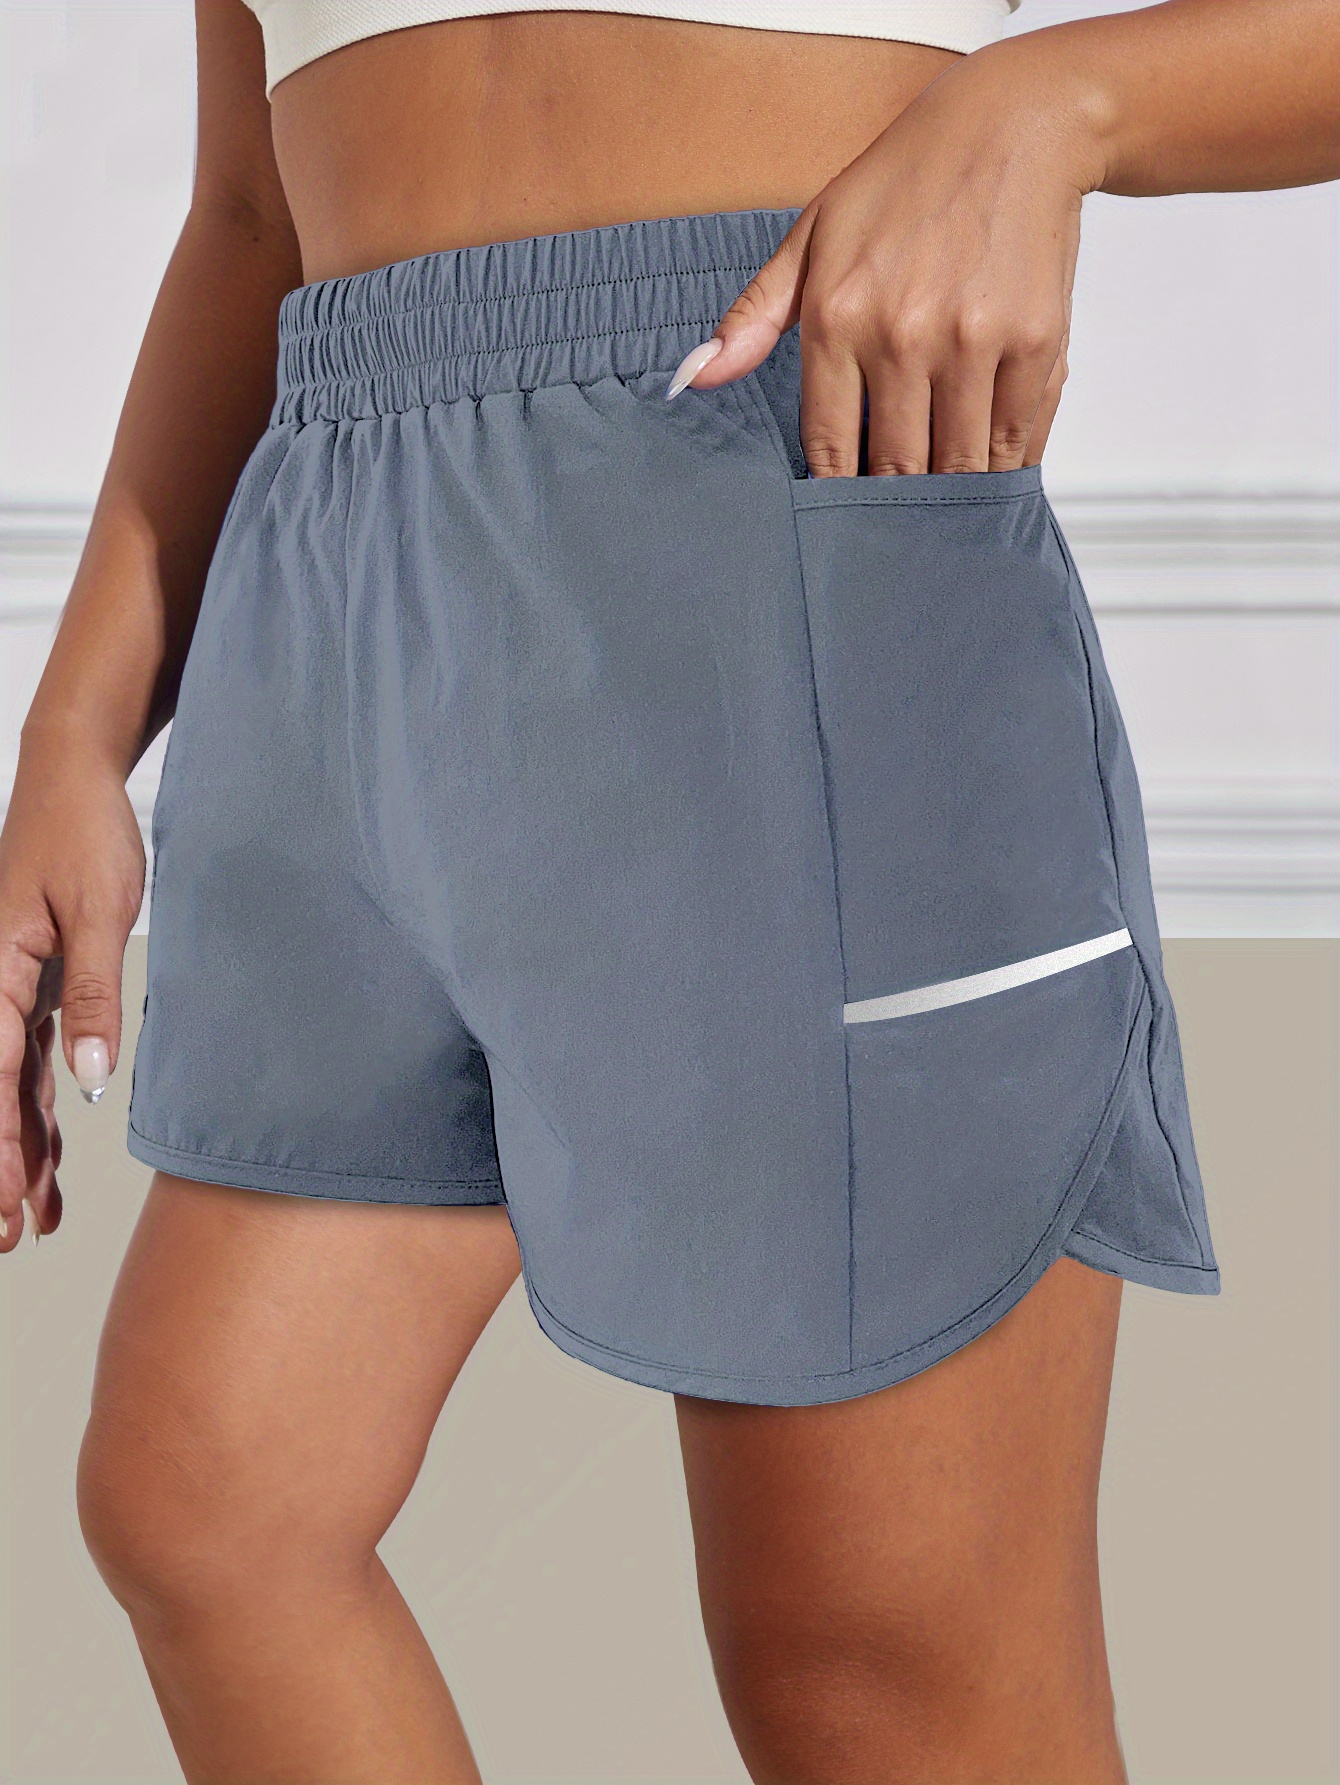 Grey Athletic Shorts with Phone Pocket